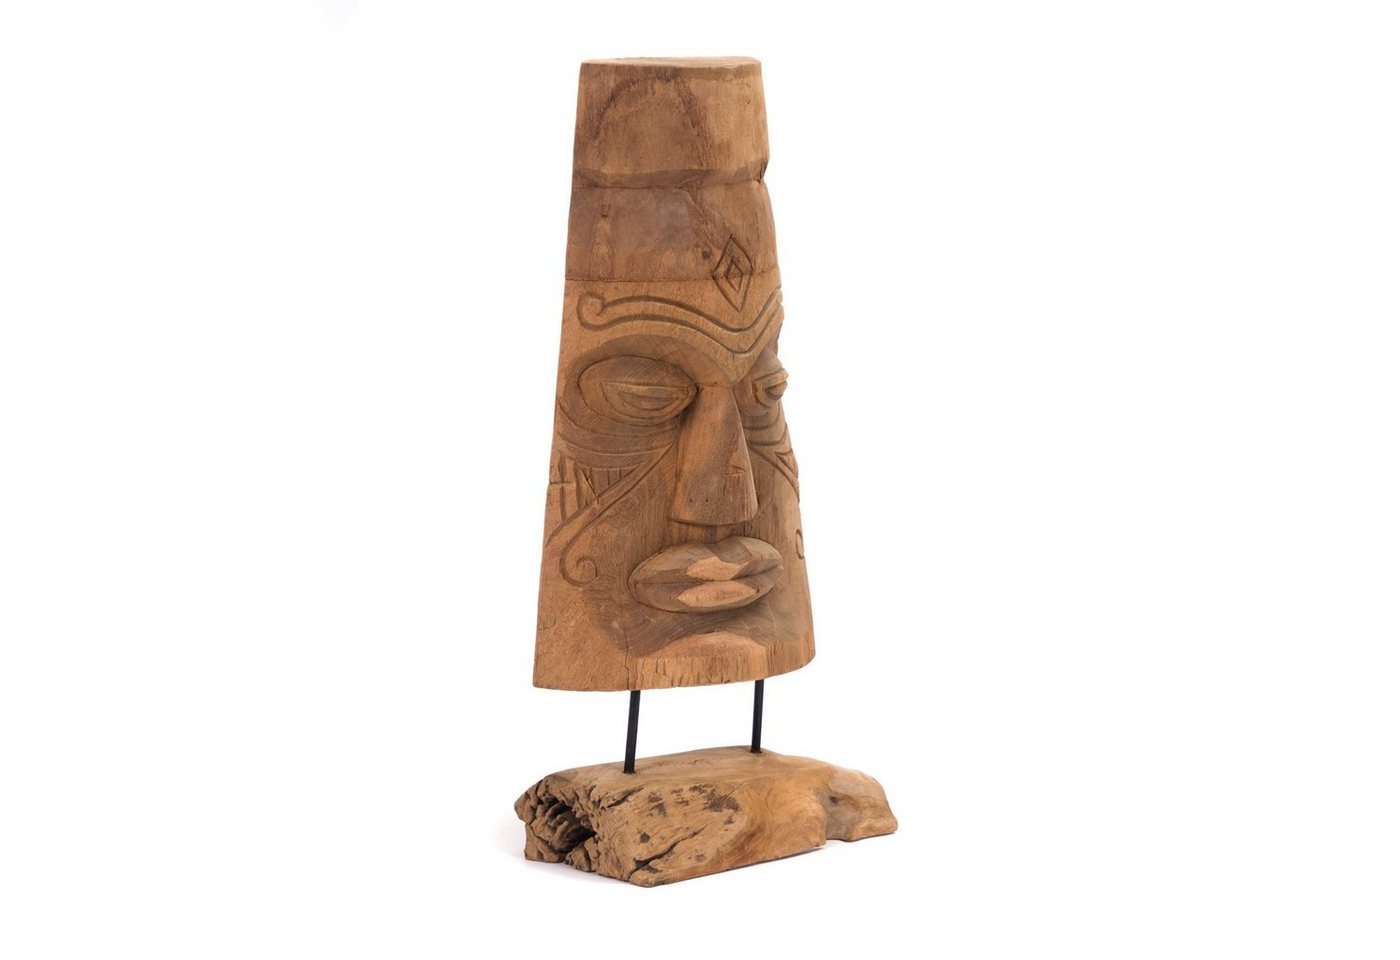 CREEDWOOD Skulptur HOLZ SKULPTUR TIKI", Massivholz, 40 cm, Hawaii Tiki Deko Objekt" von CREEDWOOD